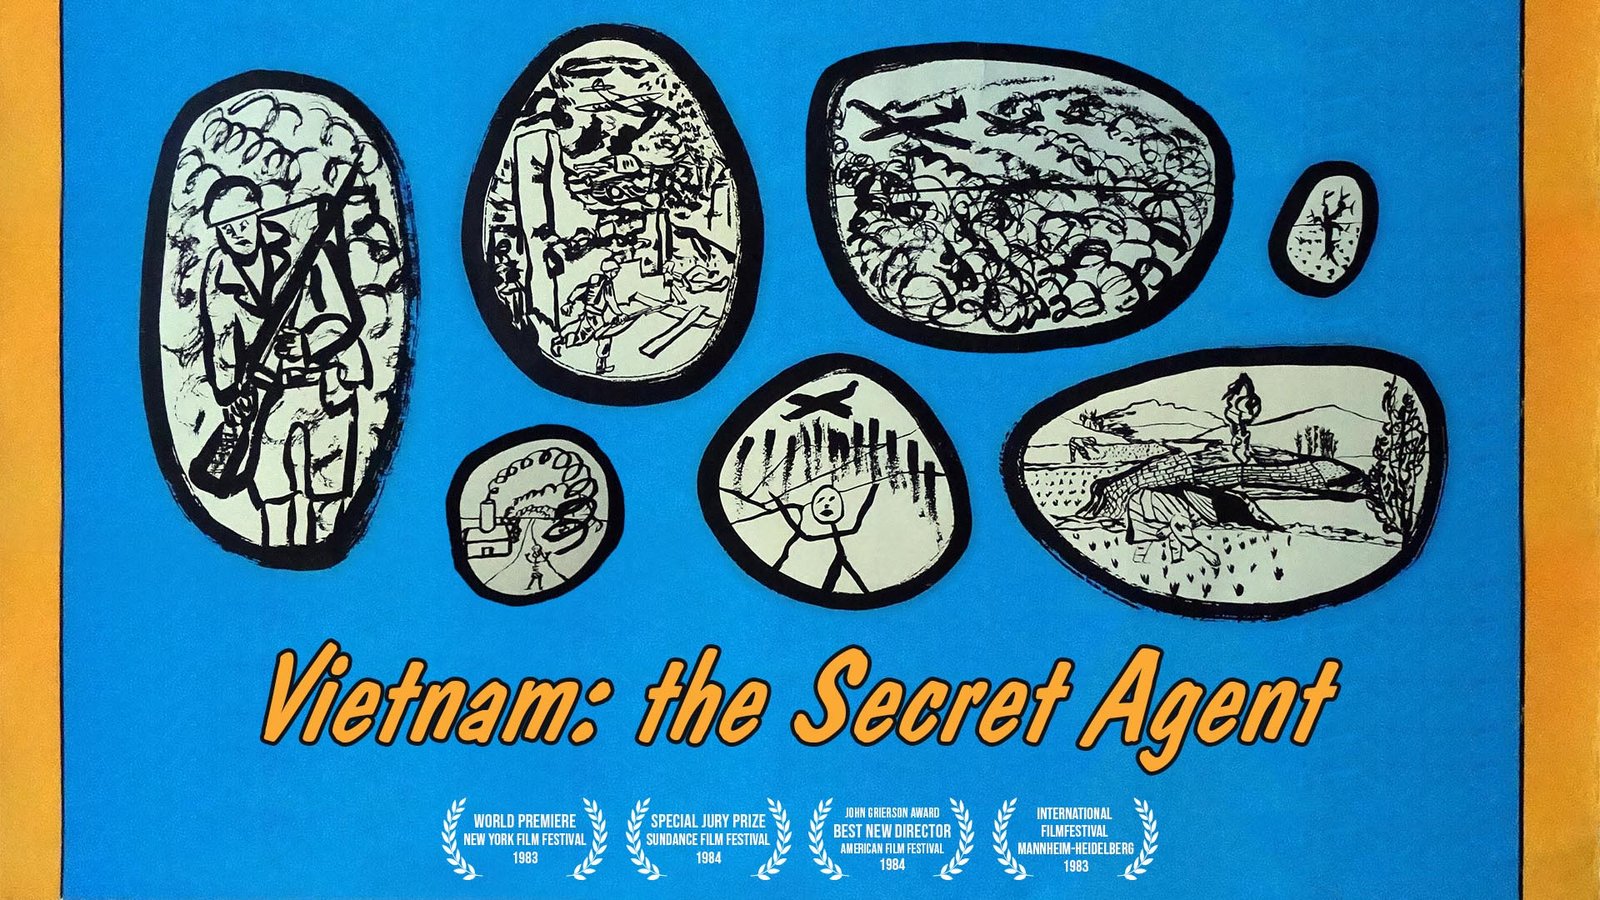 Vietnam: The Secret Agent